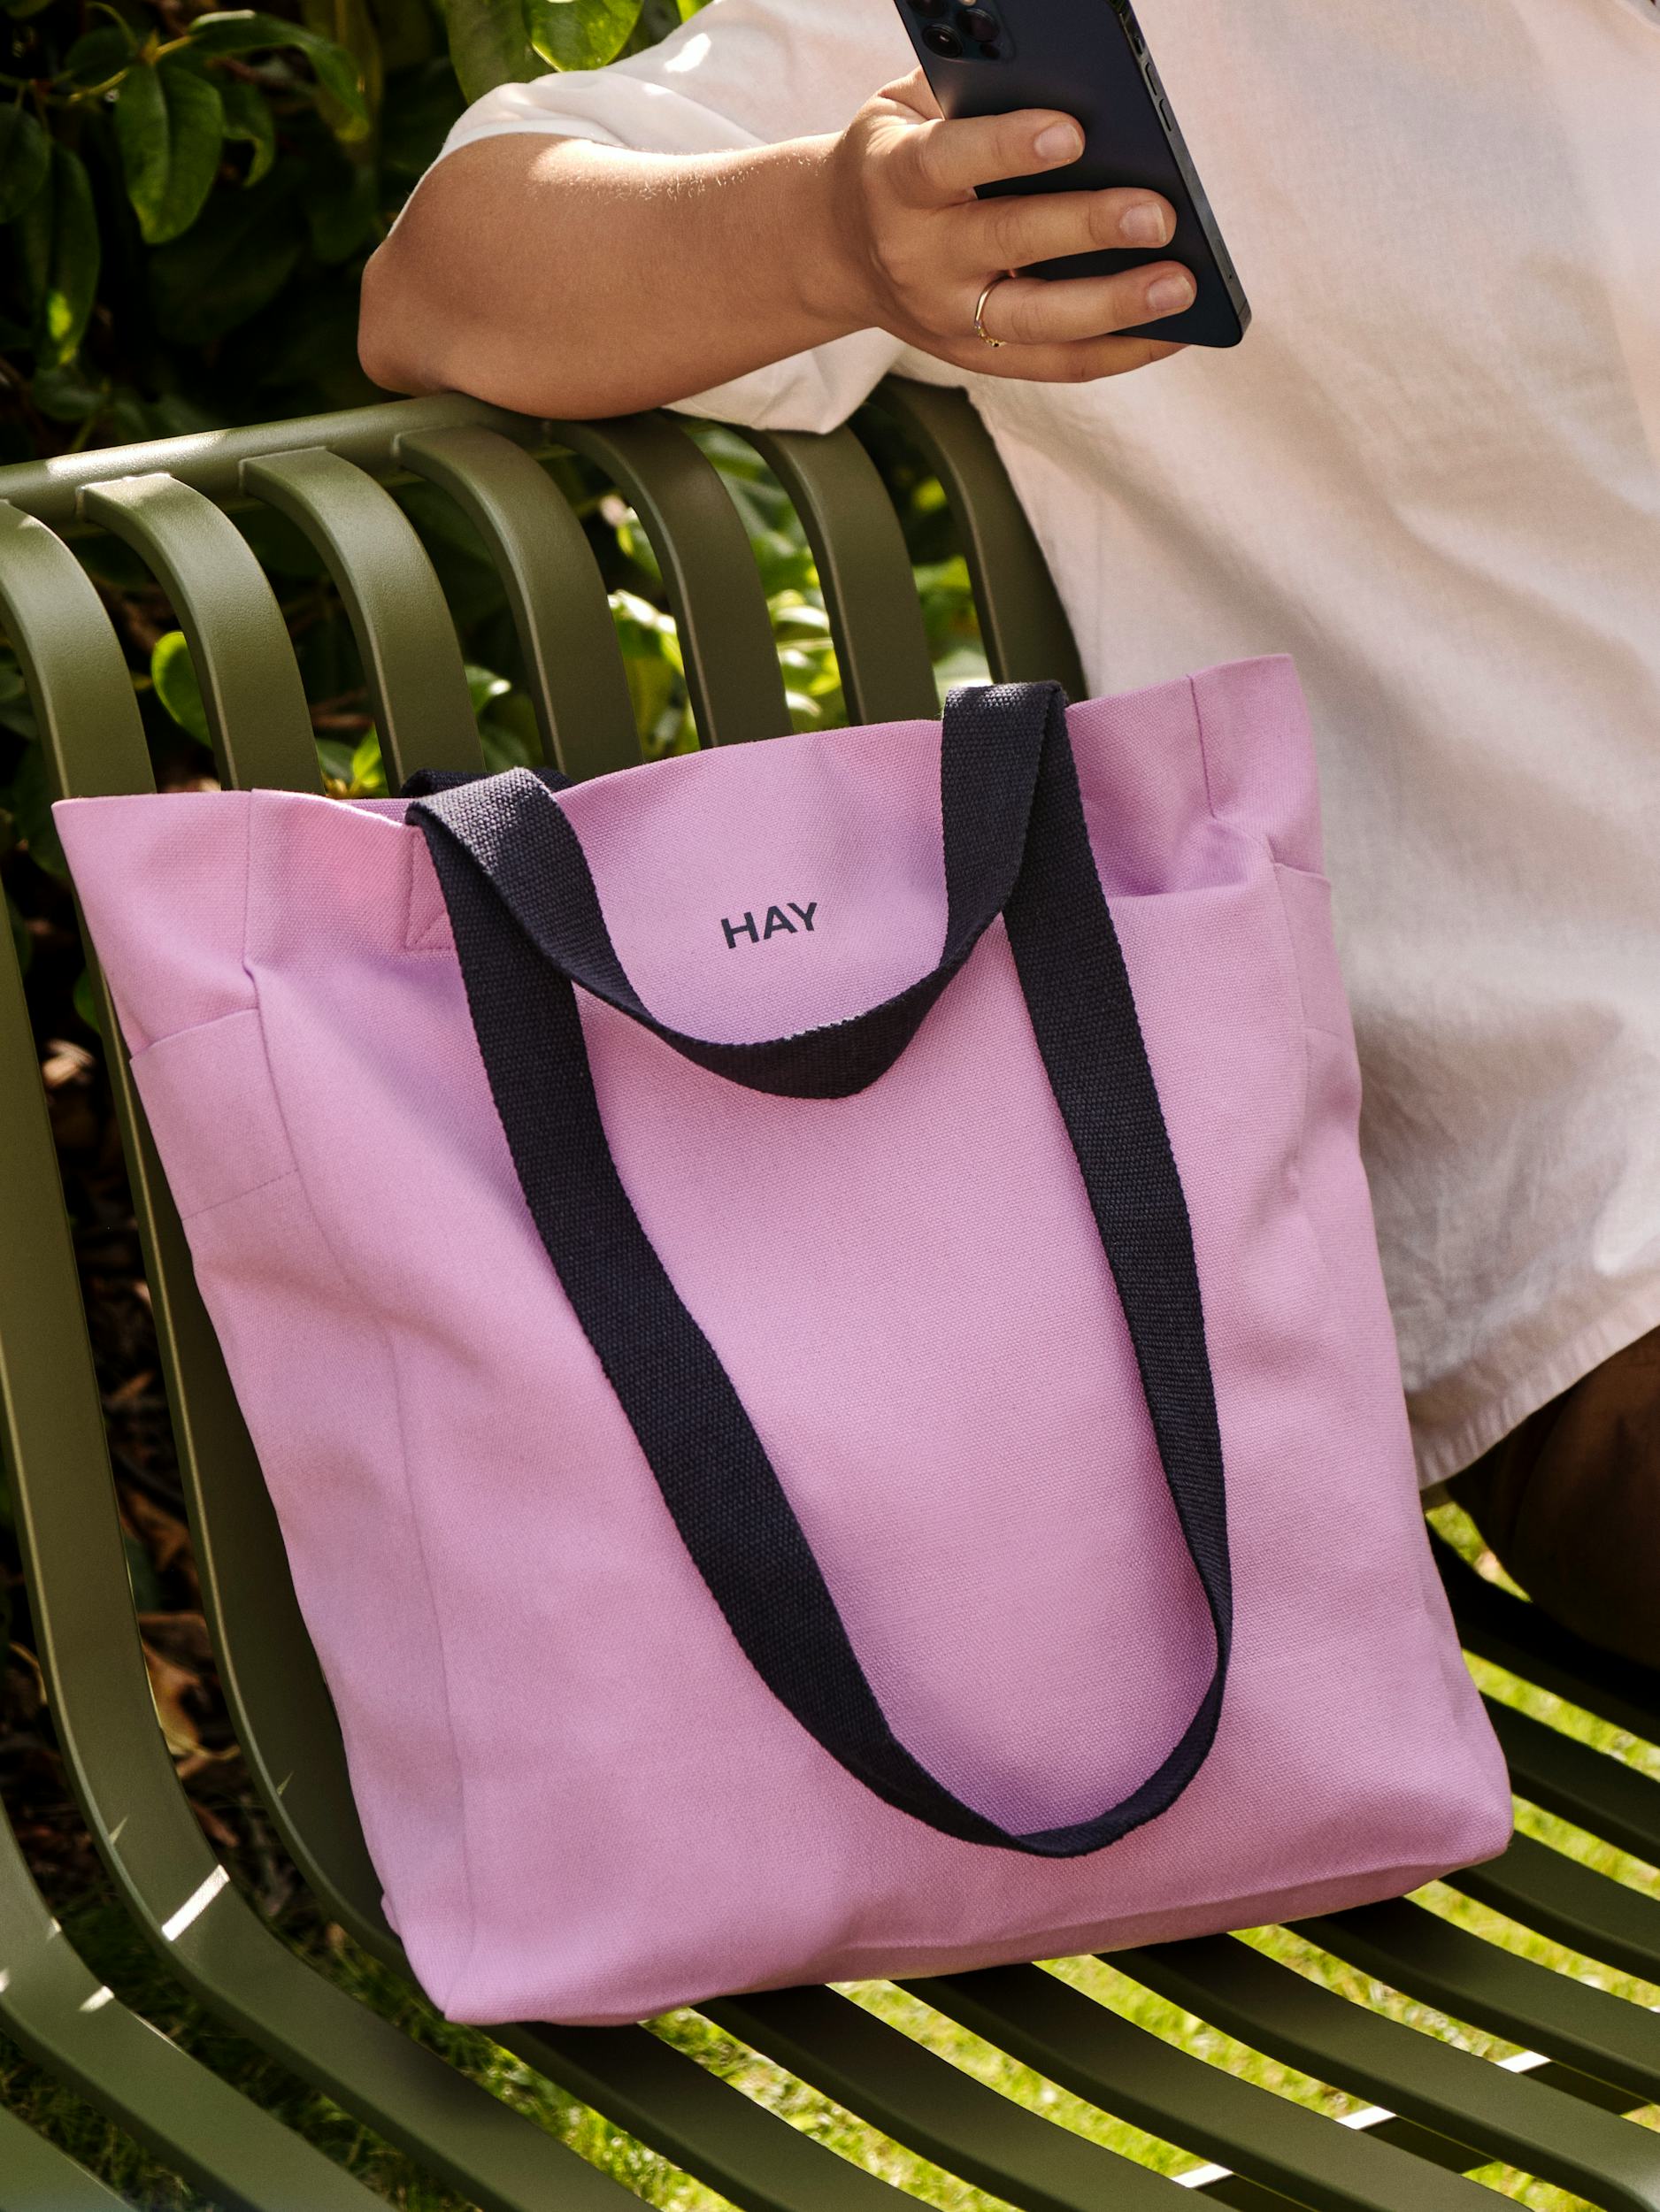 Hermès Handbags